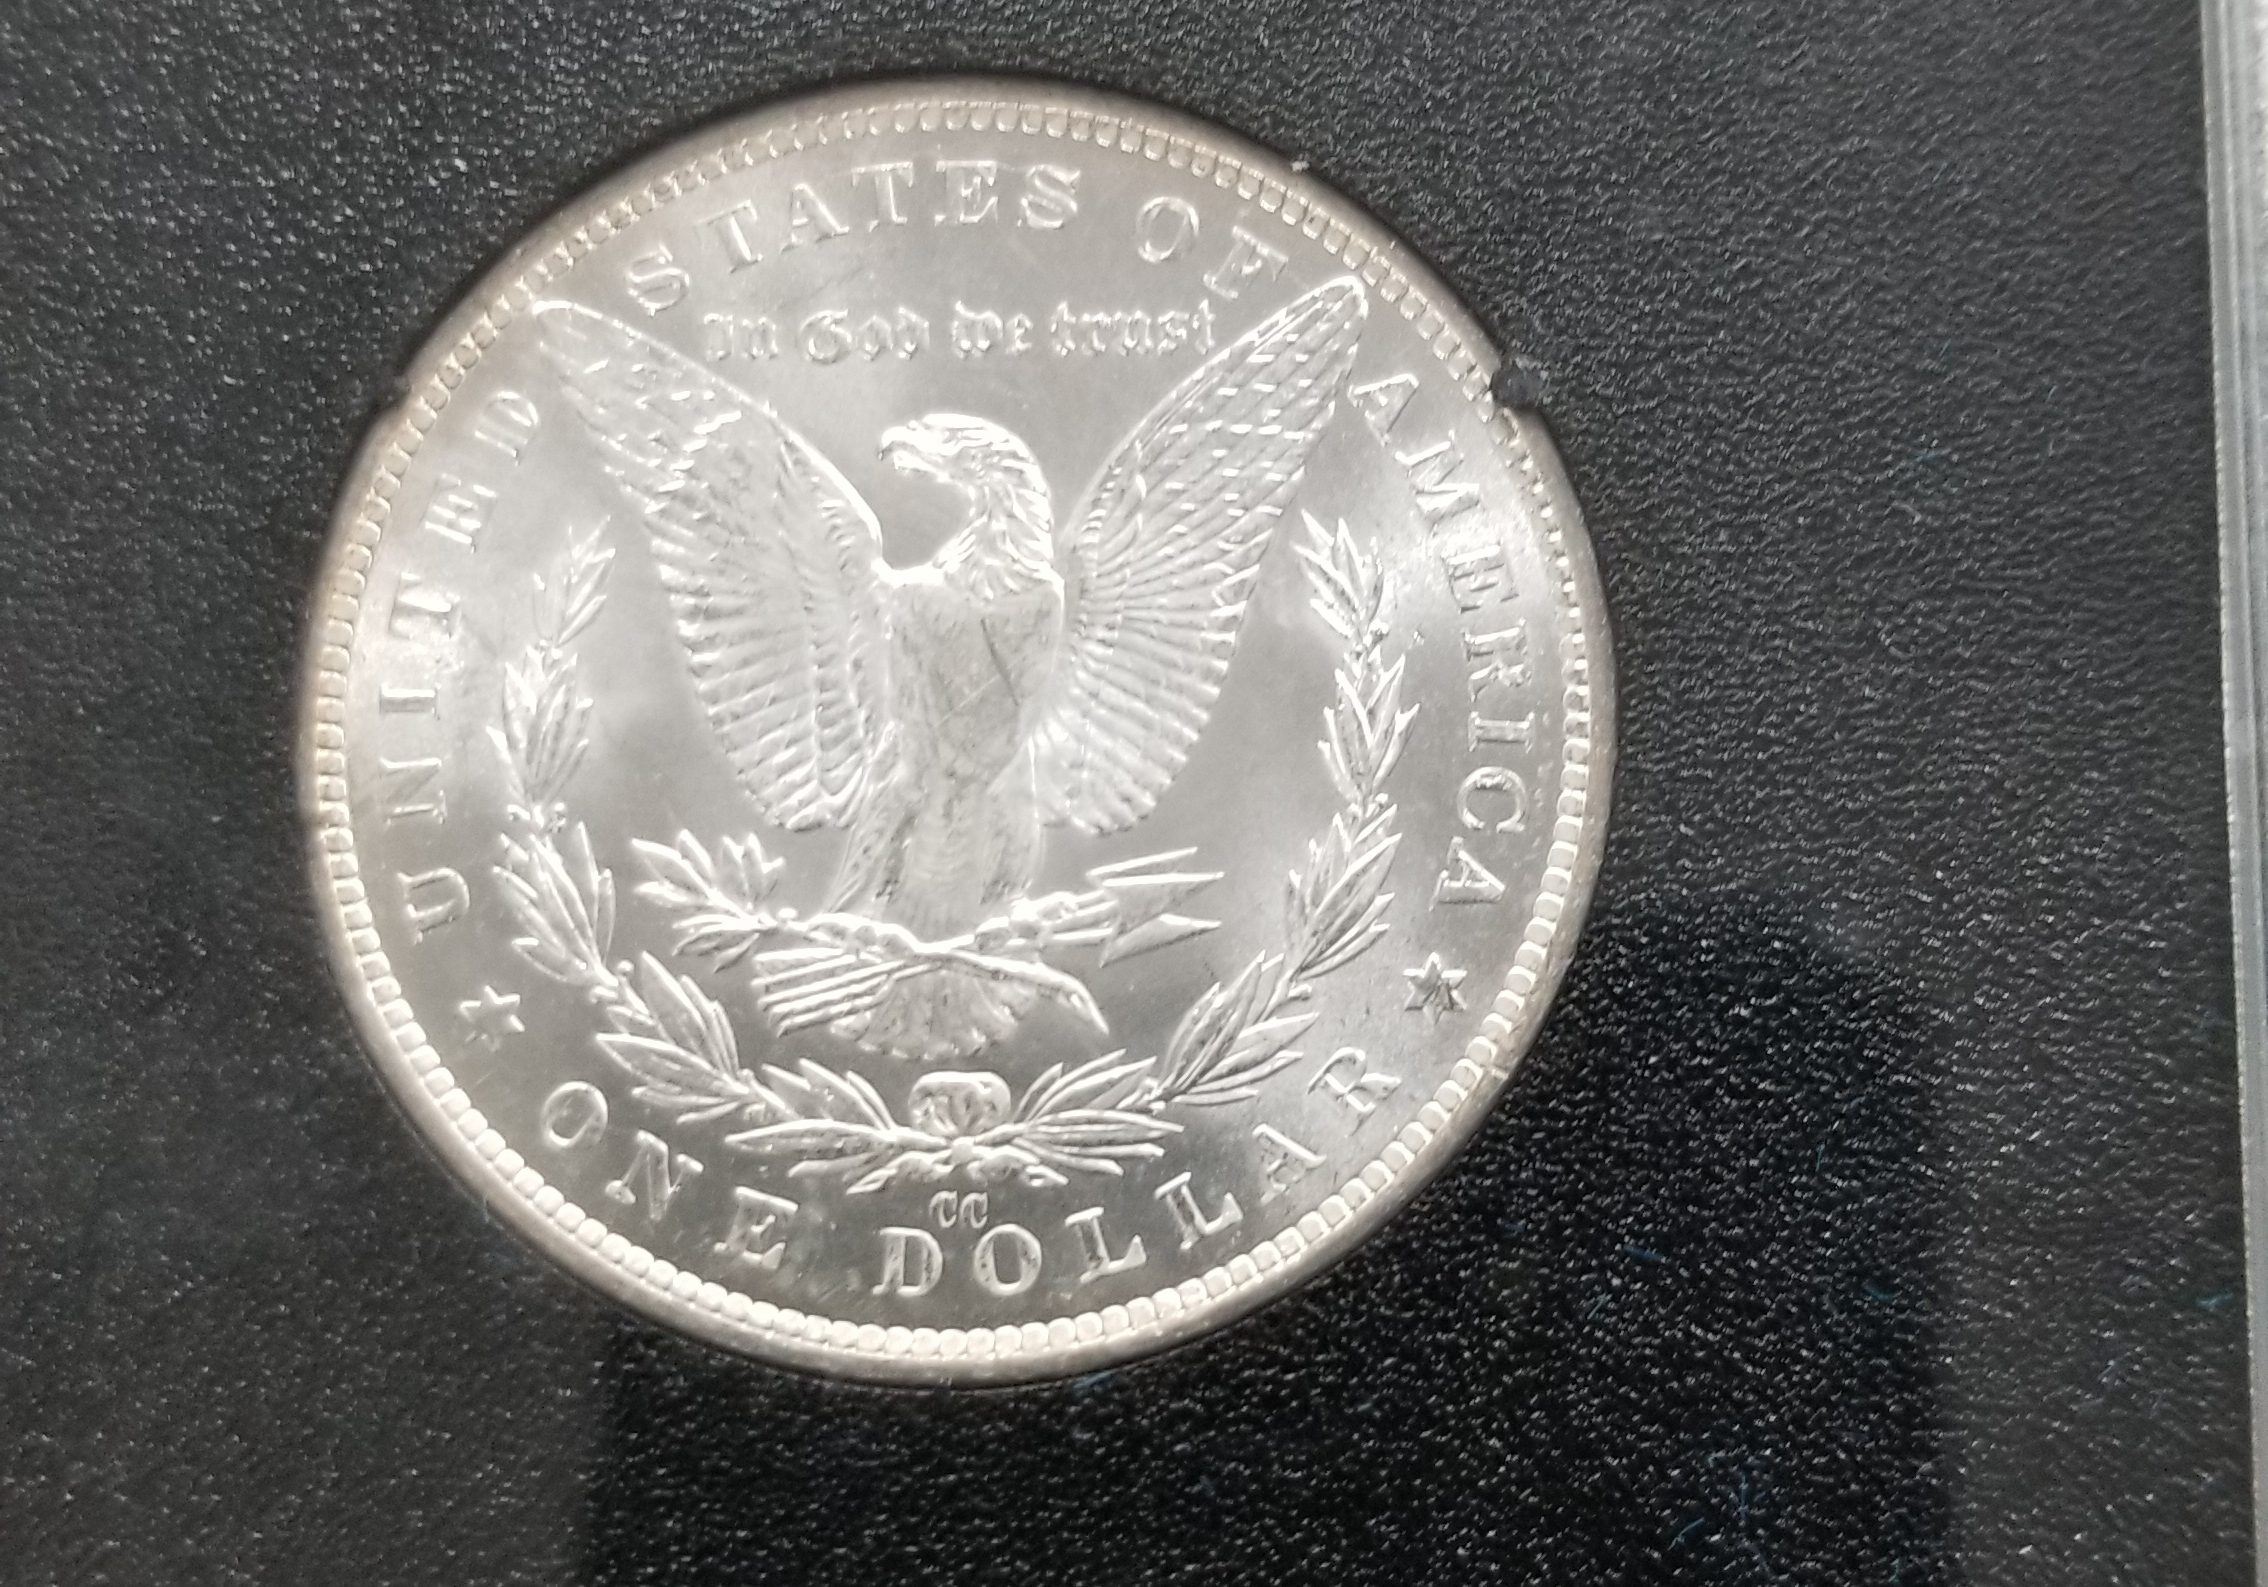 1972 carson city silver dollar value 1833